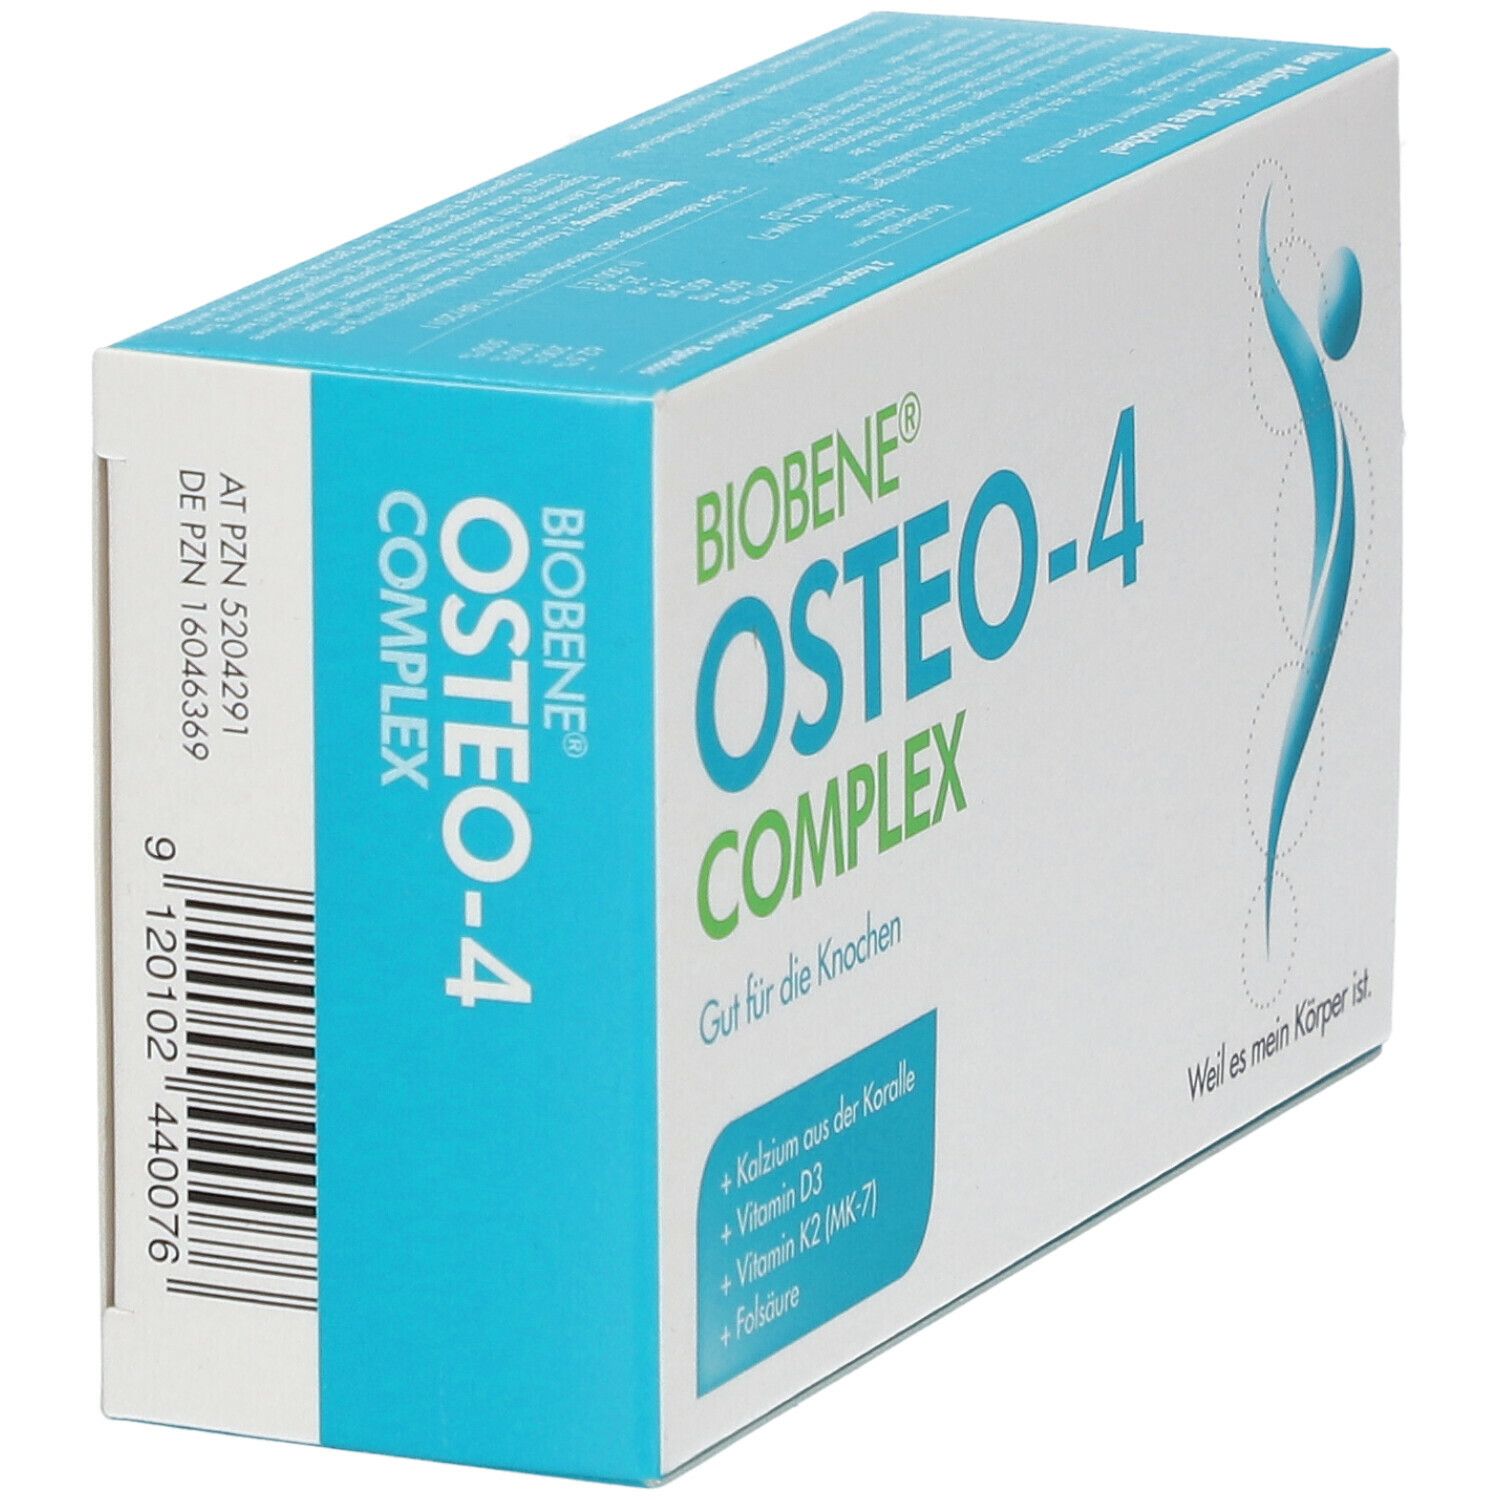 BIOBENE® Complexe Osteo-4